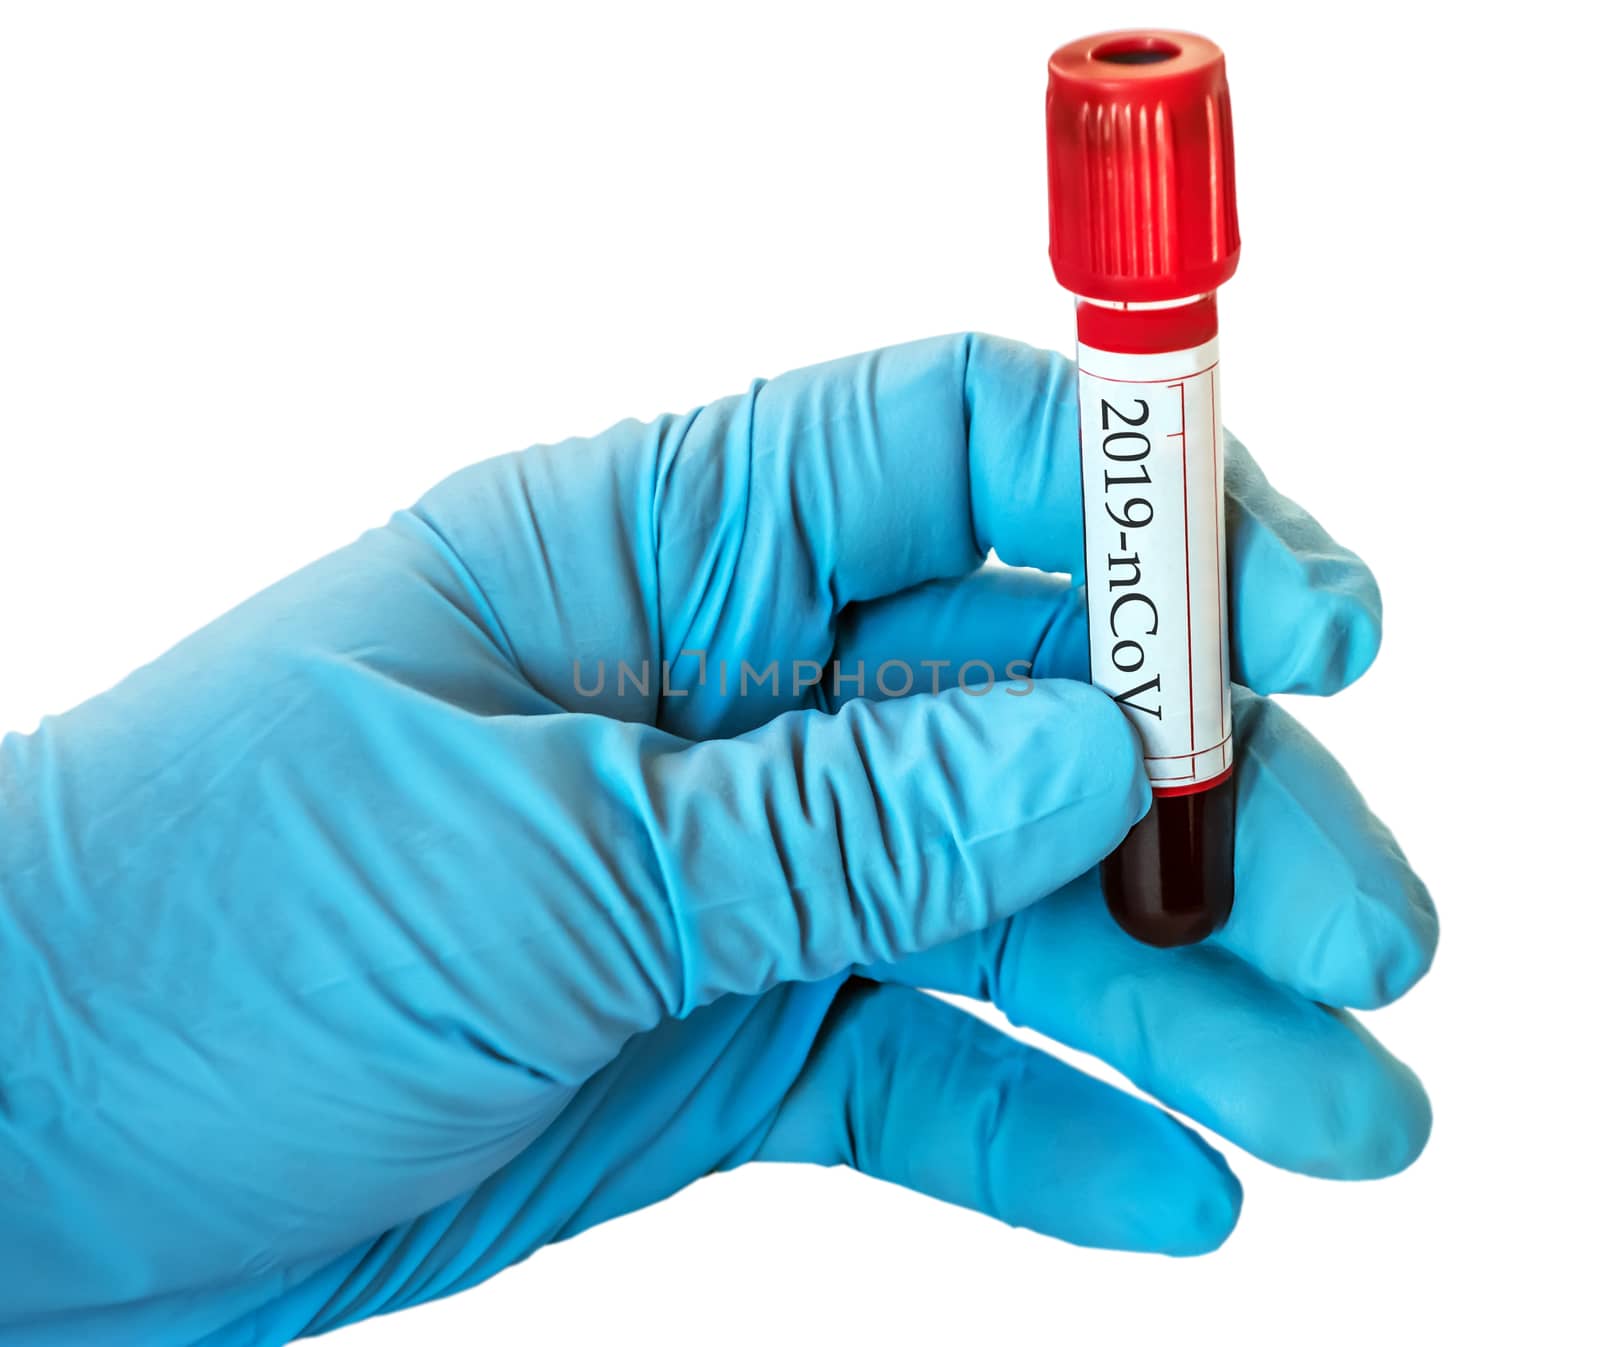 Coronavirus 2019-nCoV Blood Sample Test Tube biochemical by Vladyslav